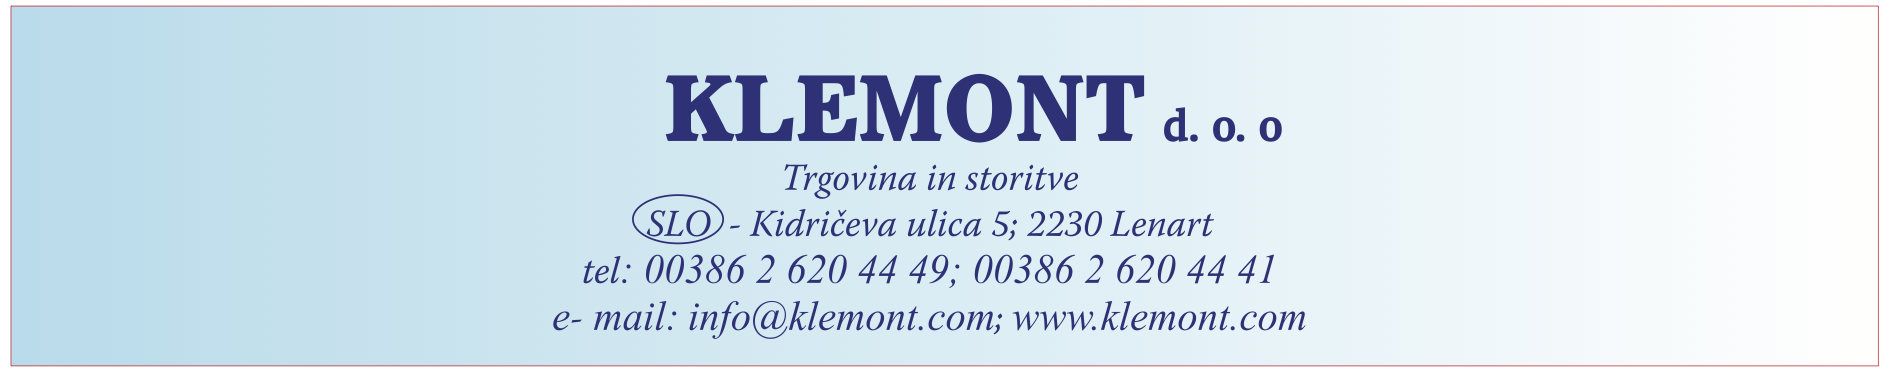 klemont-logo